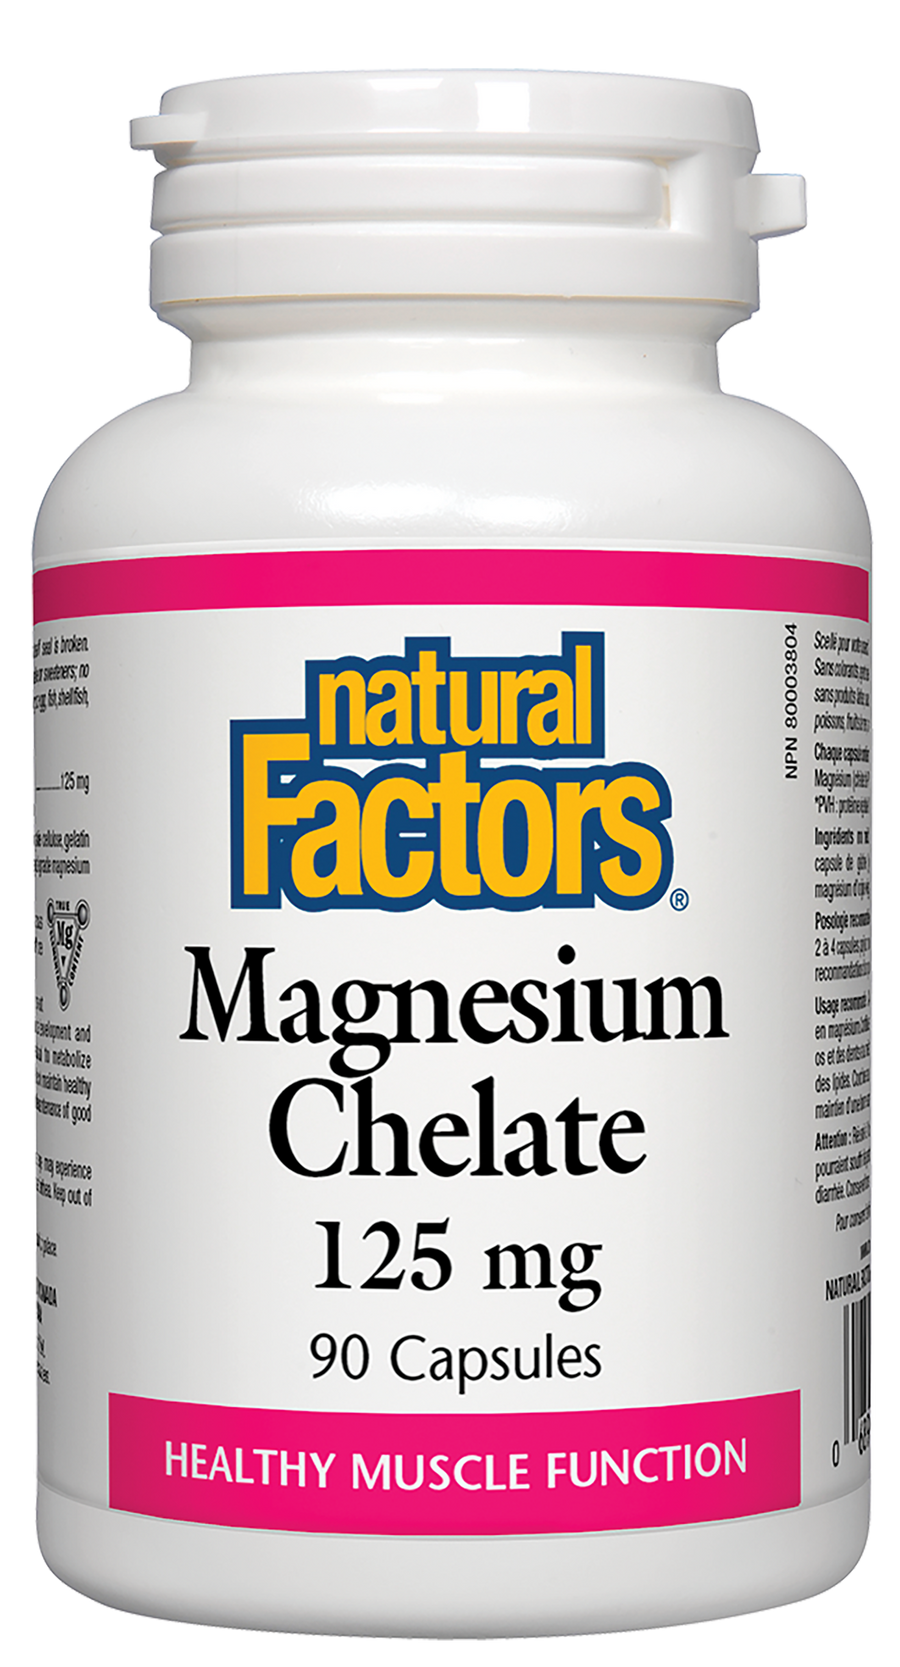 Natural Factors Magnesium Chelate 125mg 90 Capsules